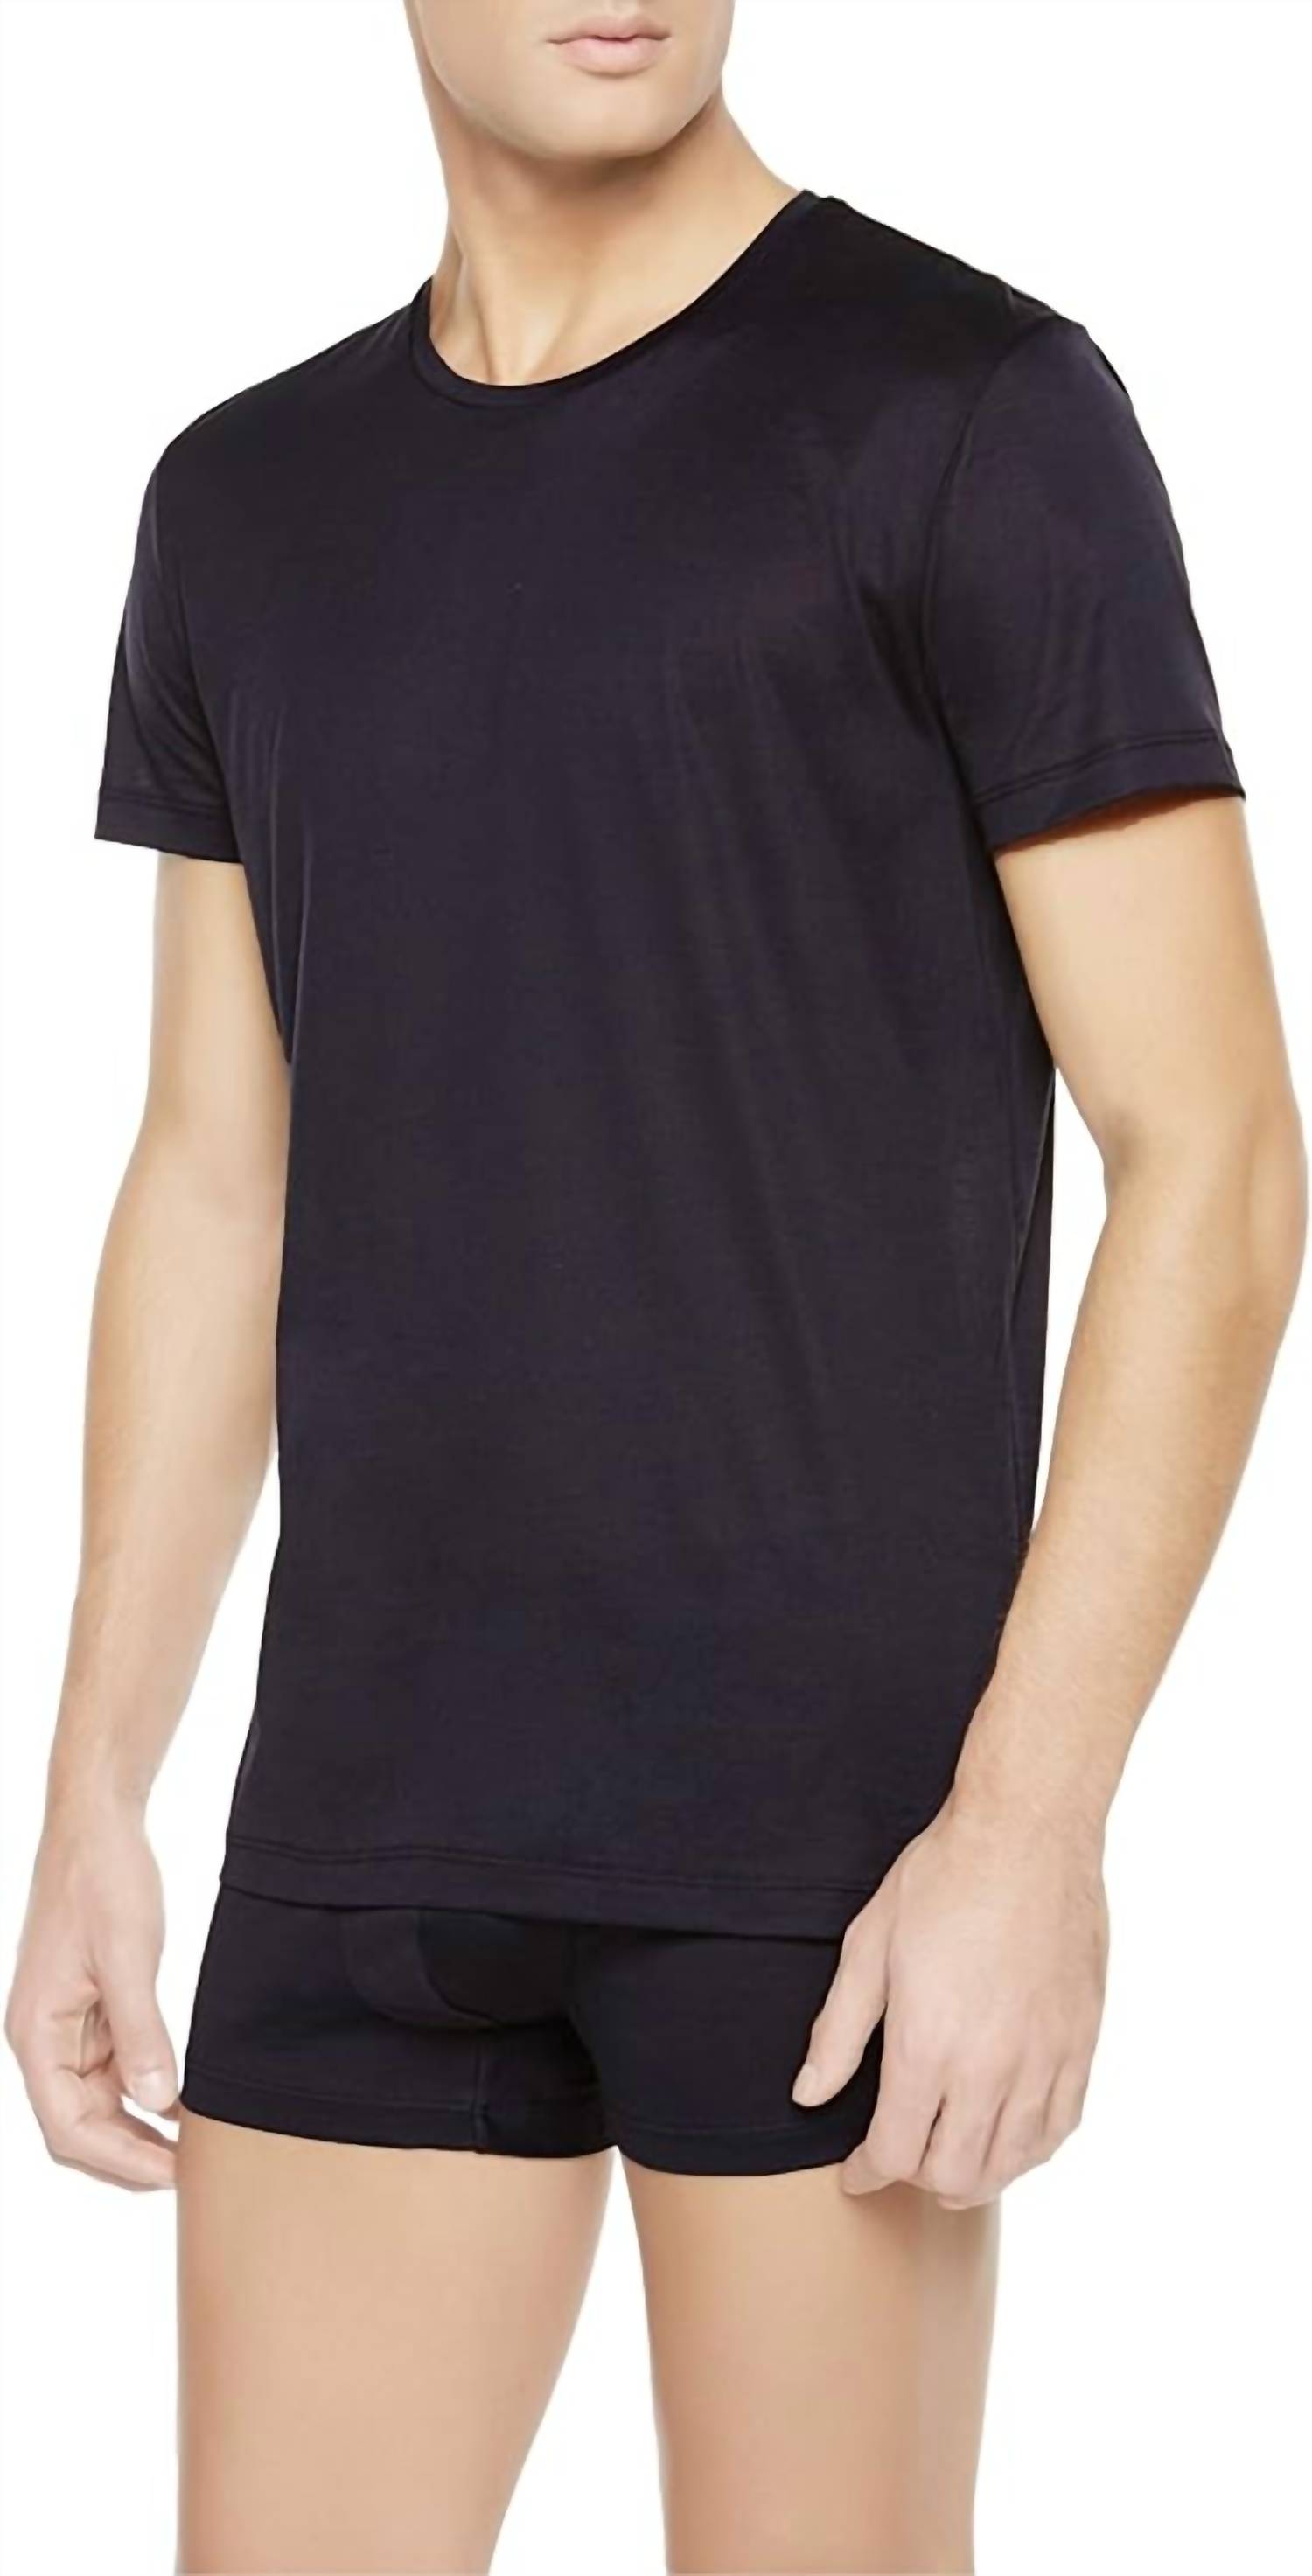 Nero Perla Elegance Short Sleeve Crew Neck T-Shirt In Black